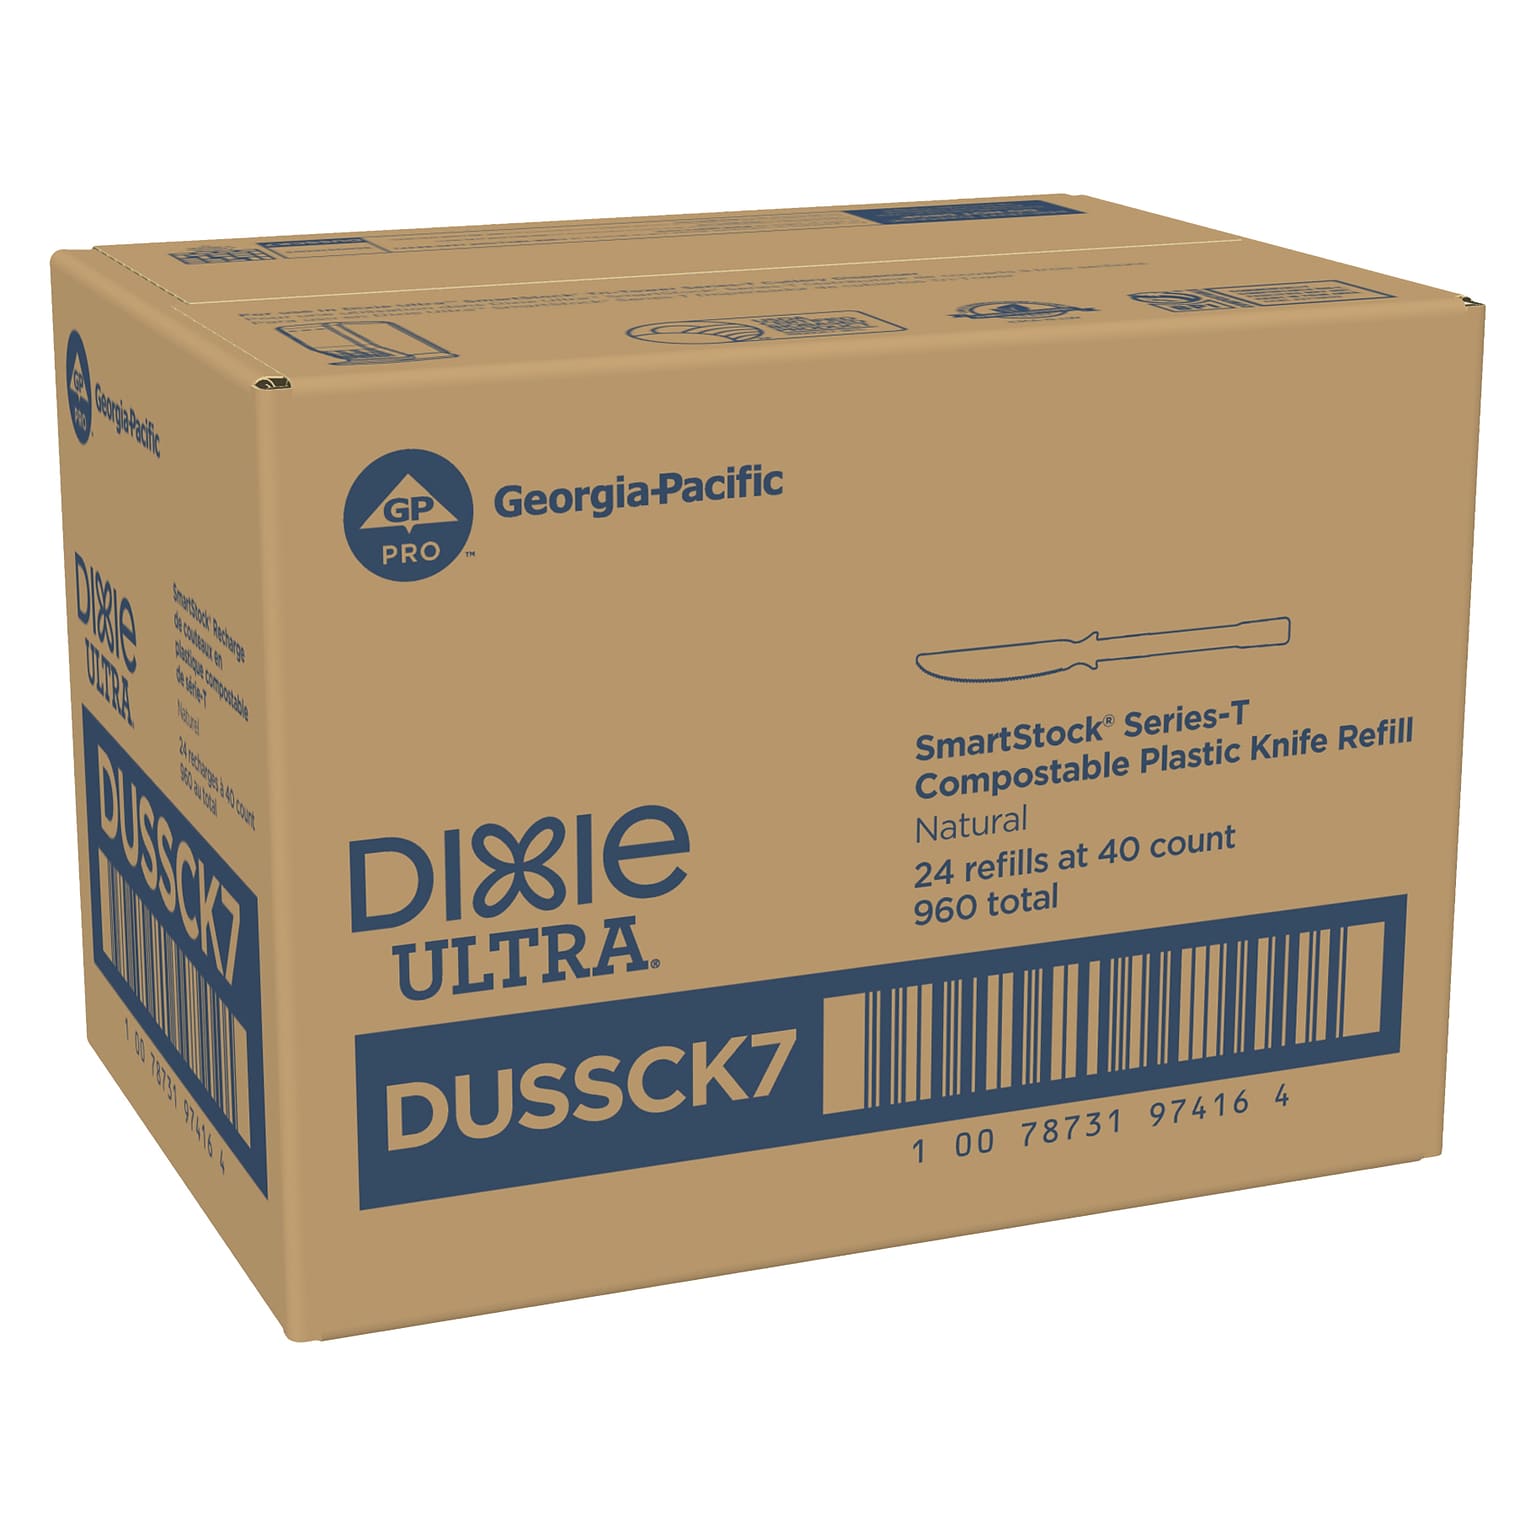 Dixie Ultra SmartStock Series-T Compostable Plastic Knife Refill, Beige, 40/Pack, 24 Packs/Carton (DUSSCK7)